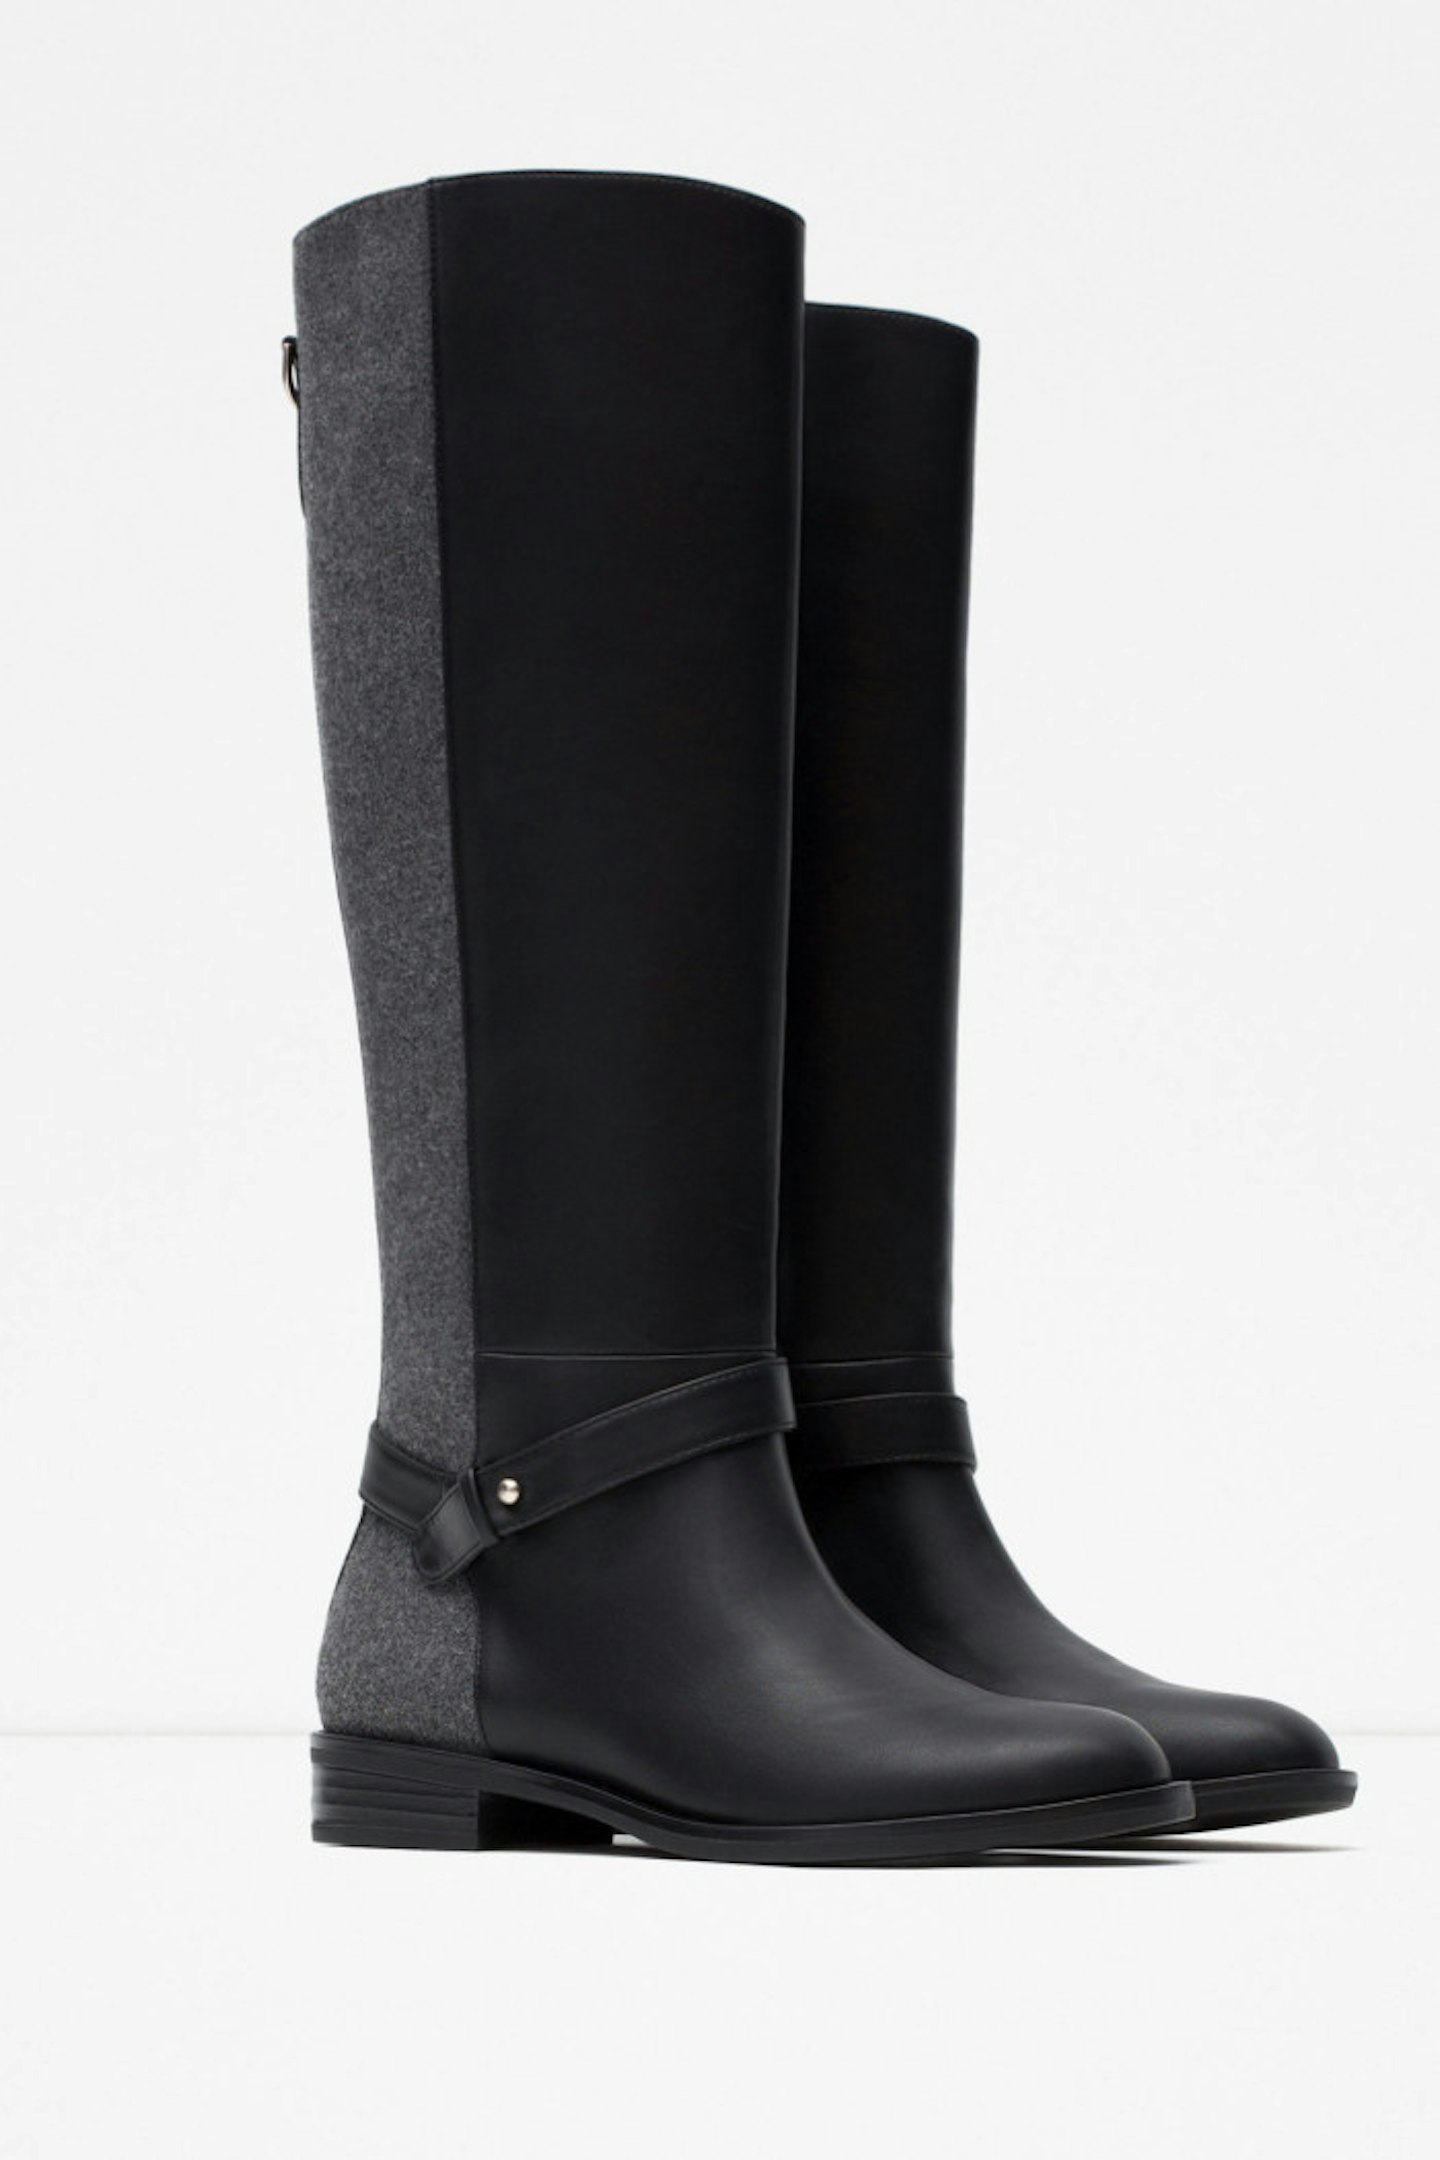 Zara Grey & Black Knee High Boots, £39.99